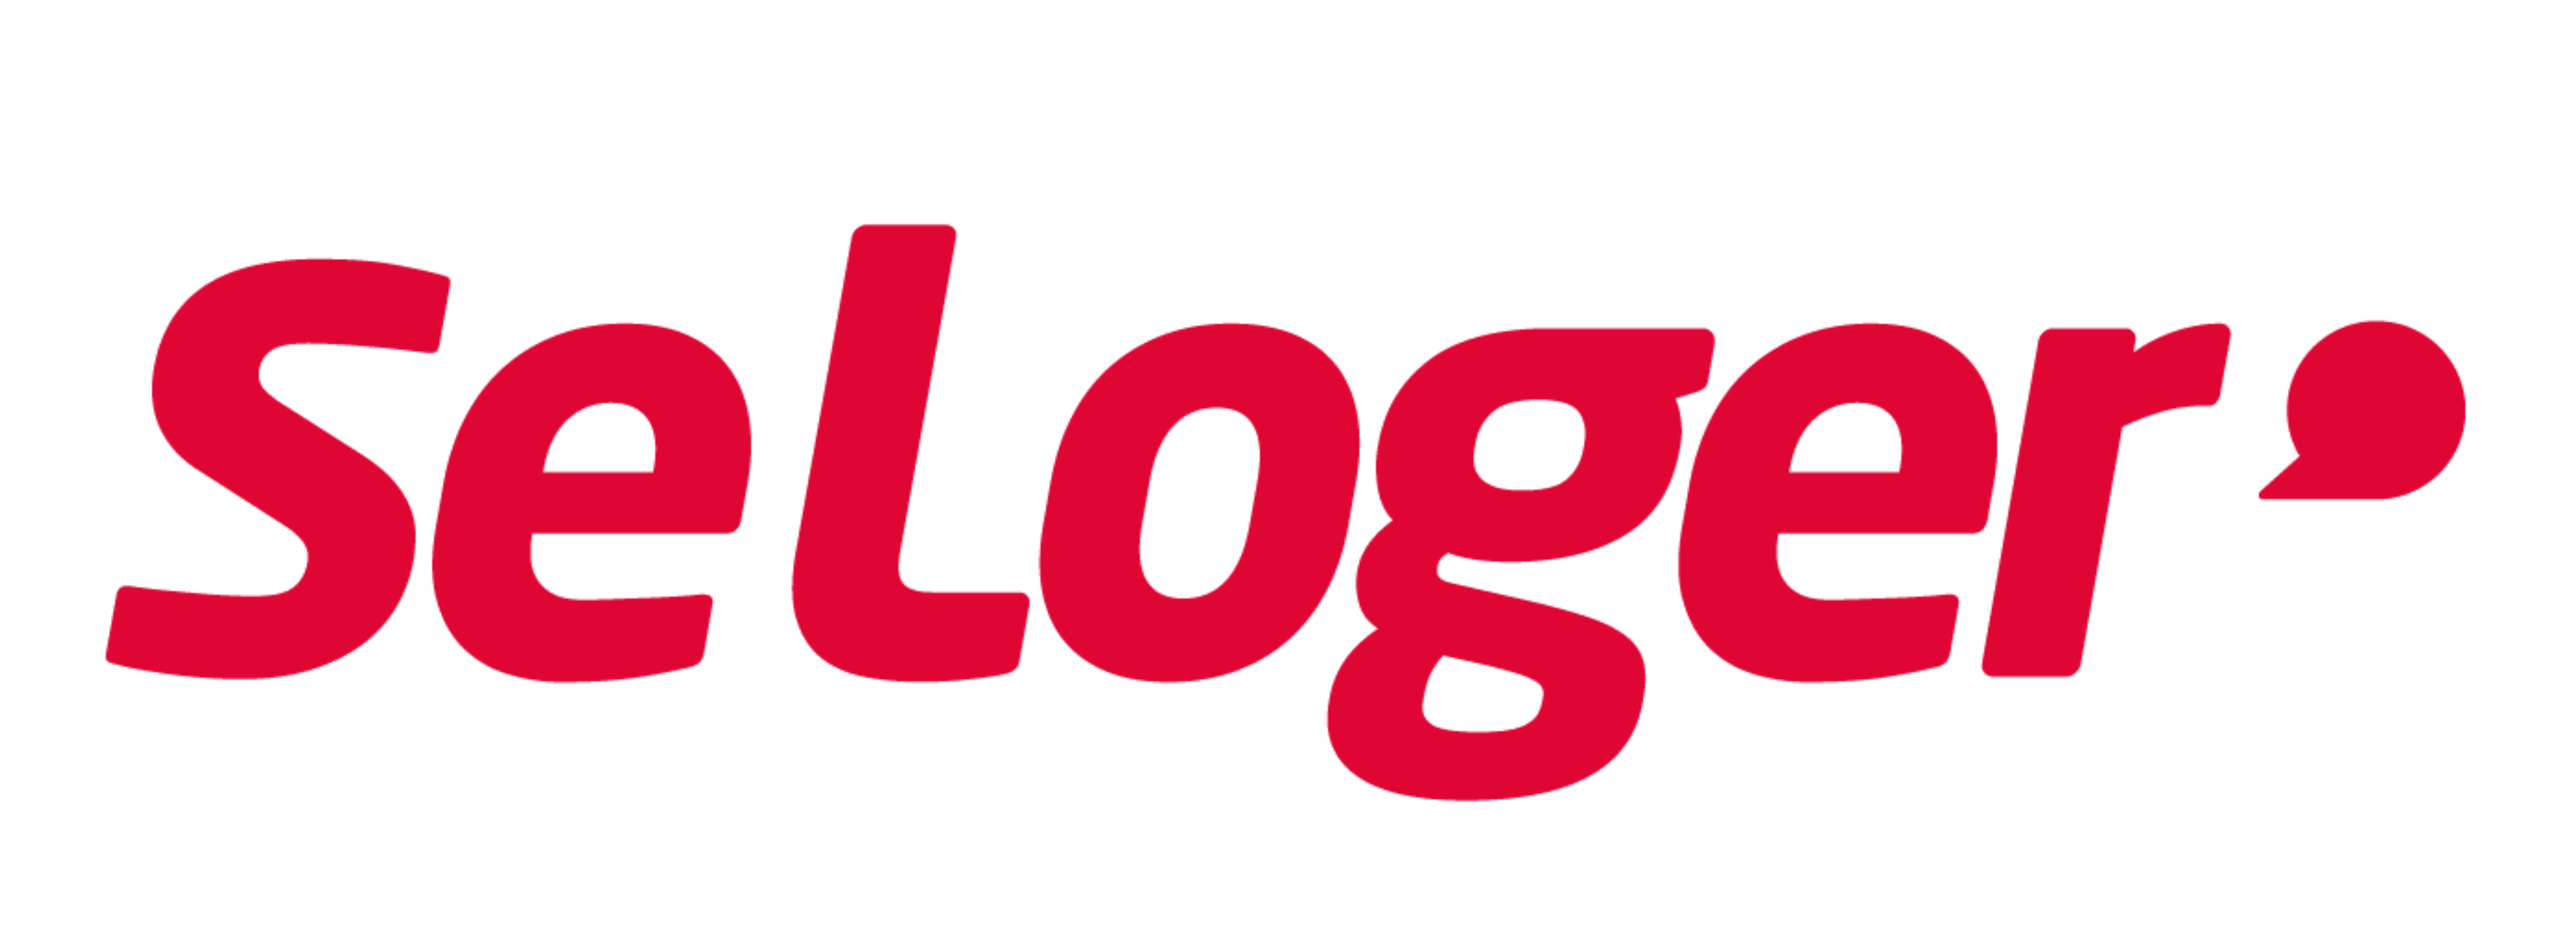 логотип seloger media